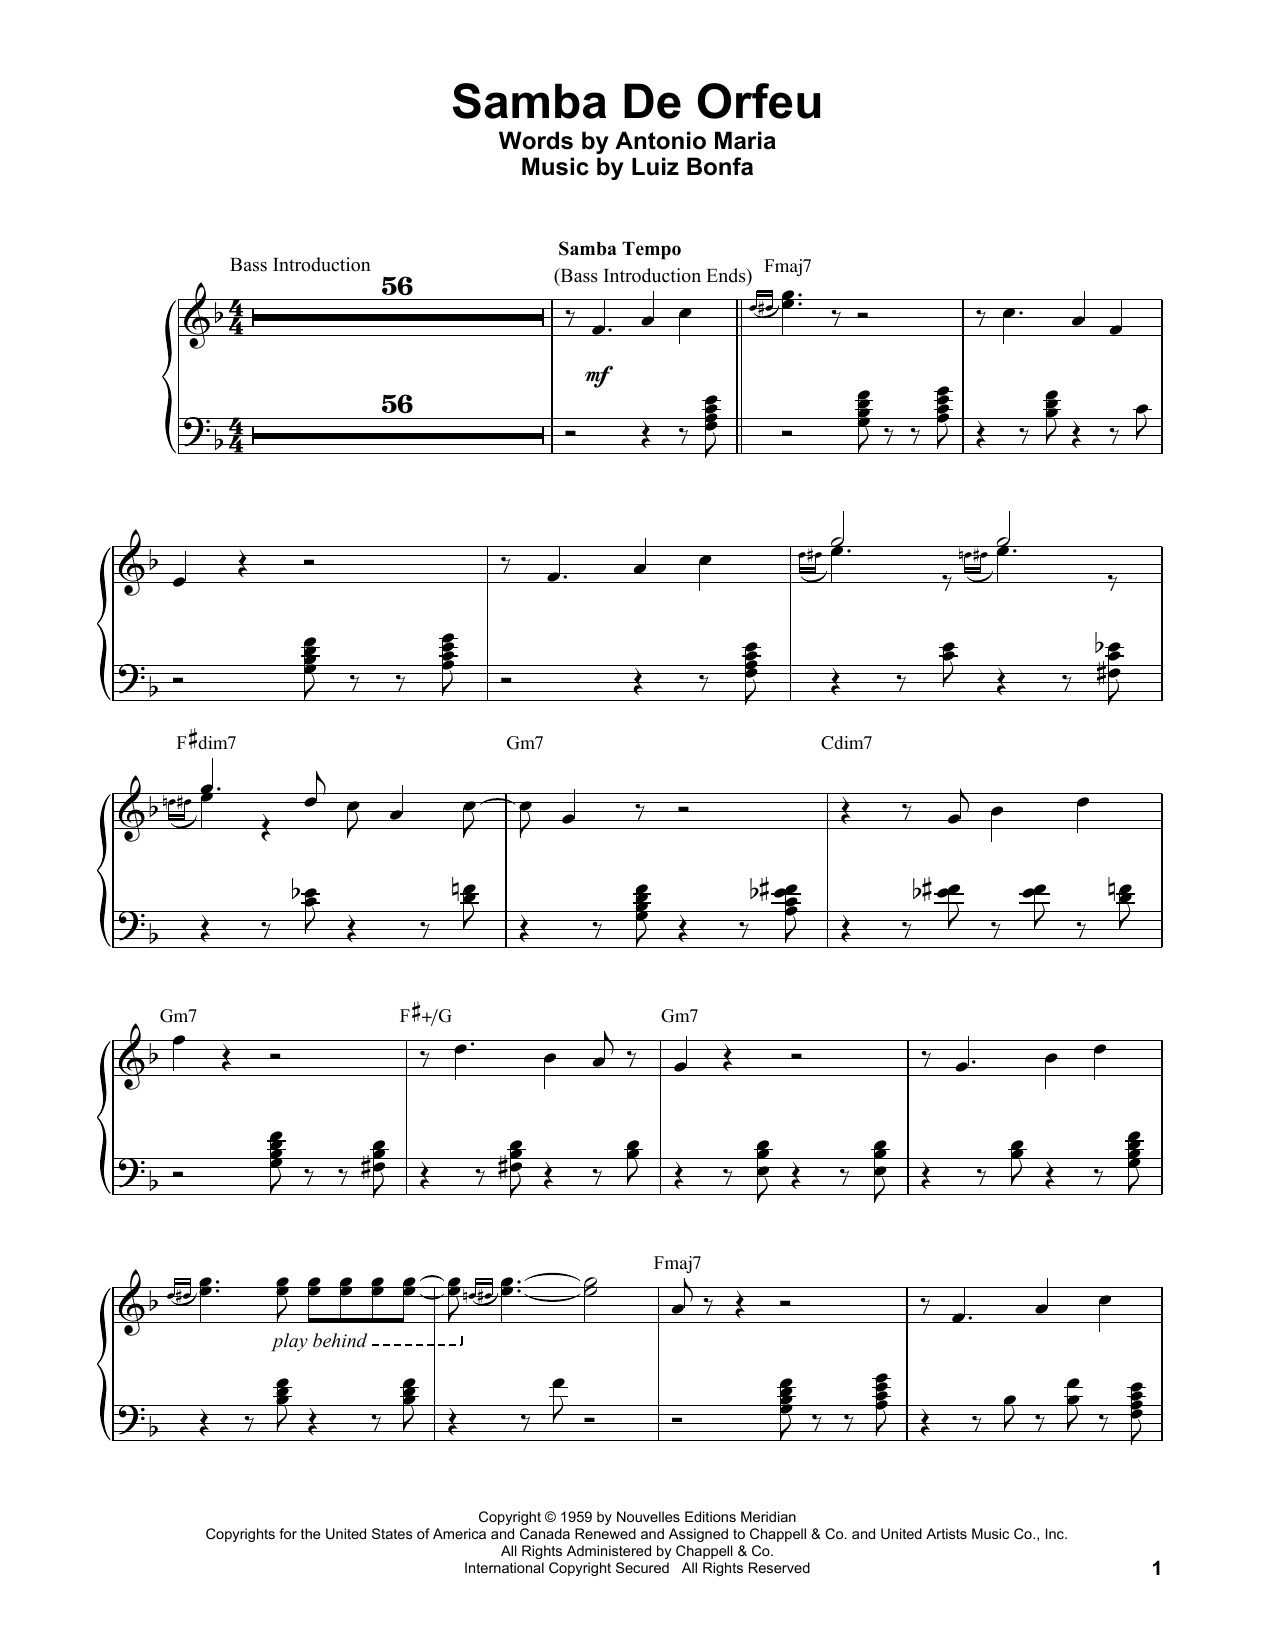 Download Vince Guaraldi Samba De Orfeu Sheet Music and learn how to play Piano Transcription PDF digital score in minutes